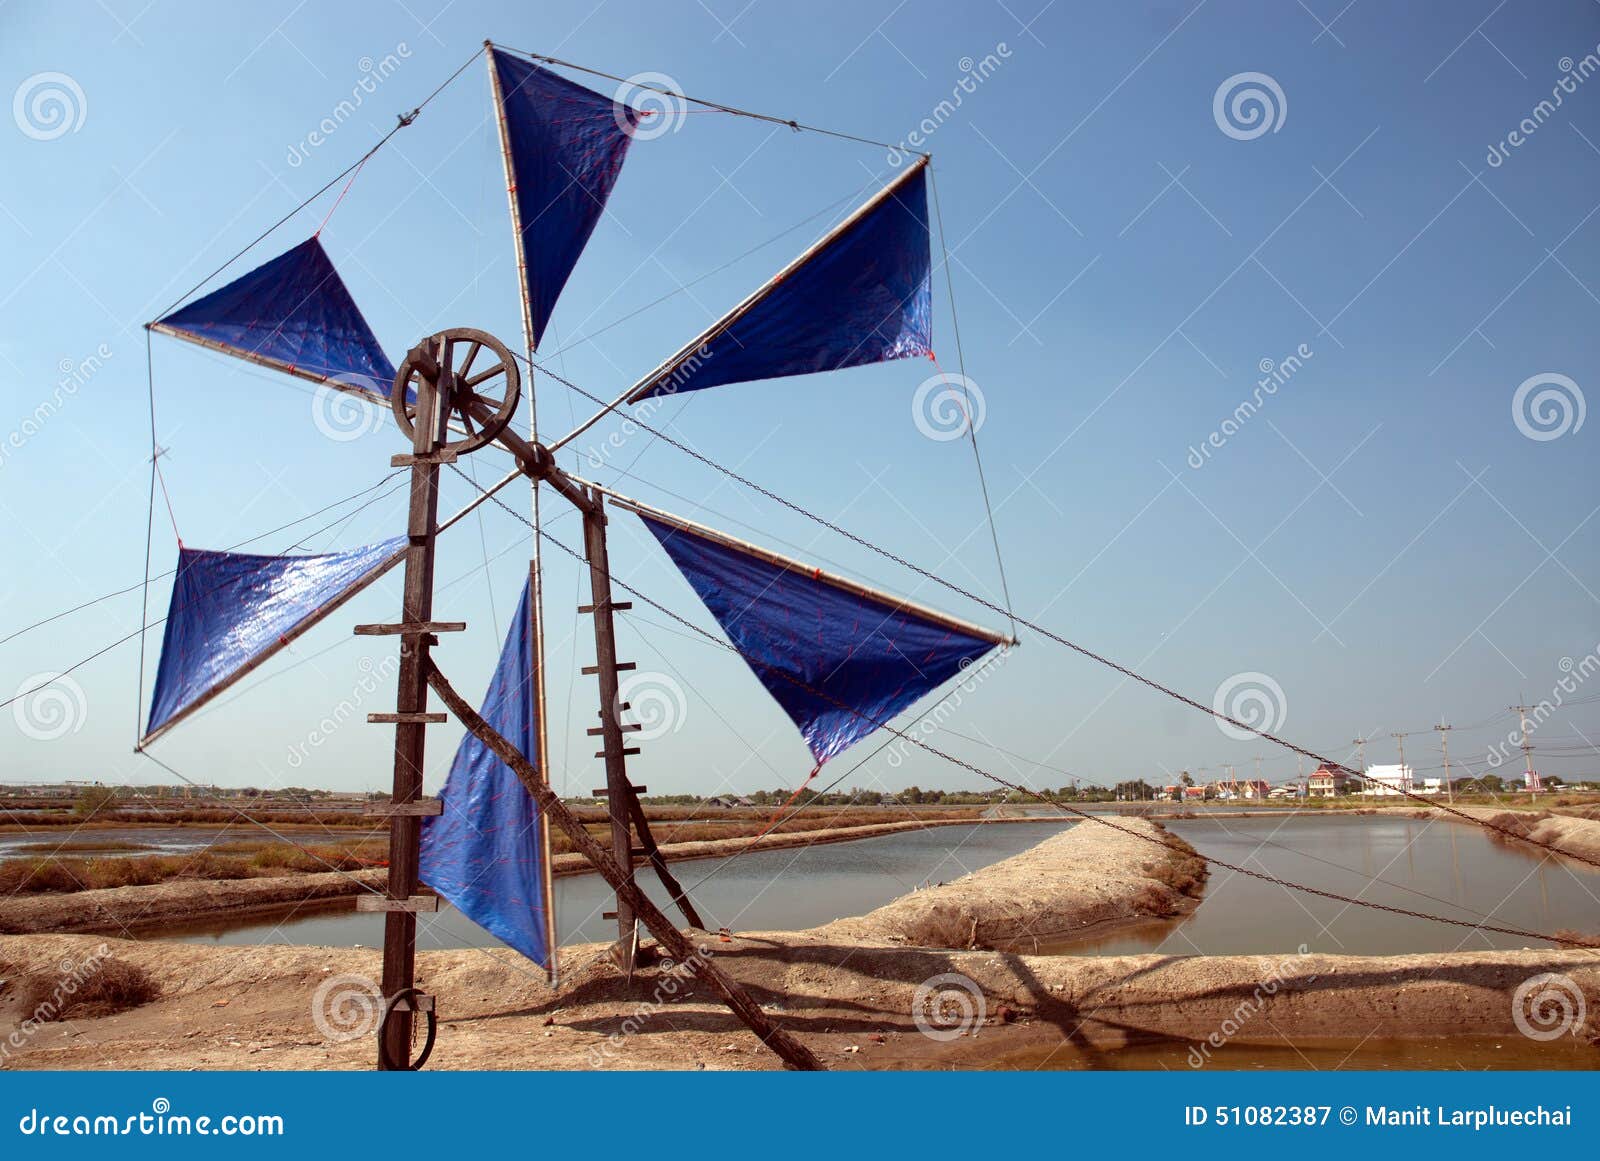 ancient wind mill use move sea water salt field traditional wooden irrigation tool driven power turbine bail 51082387